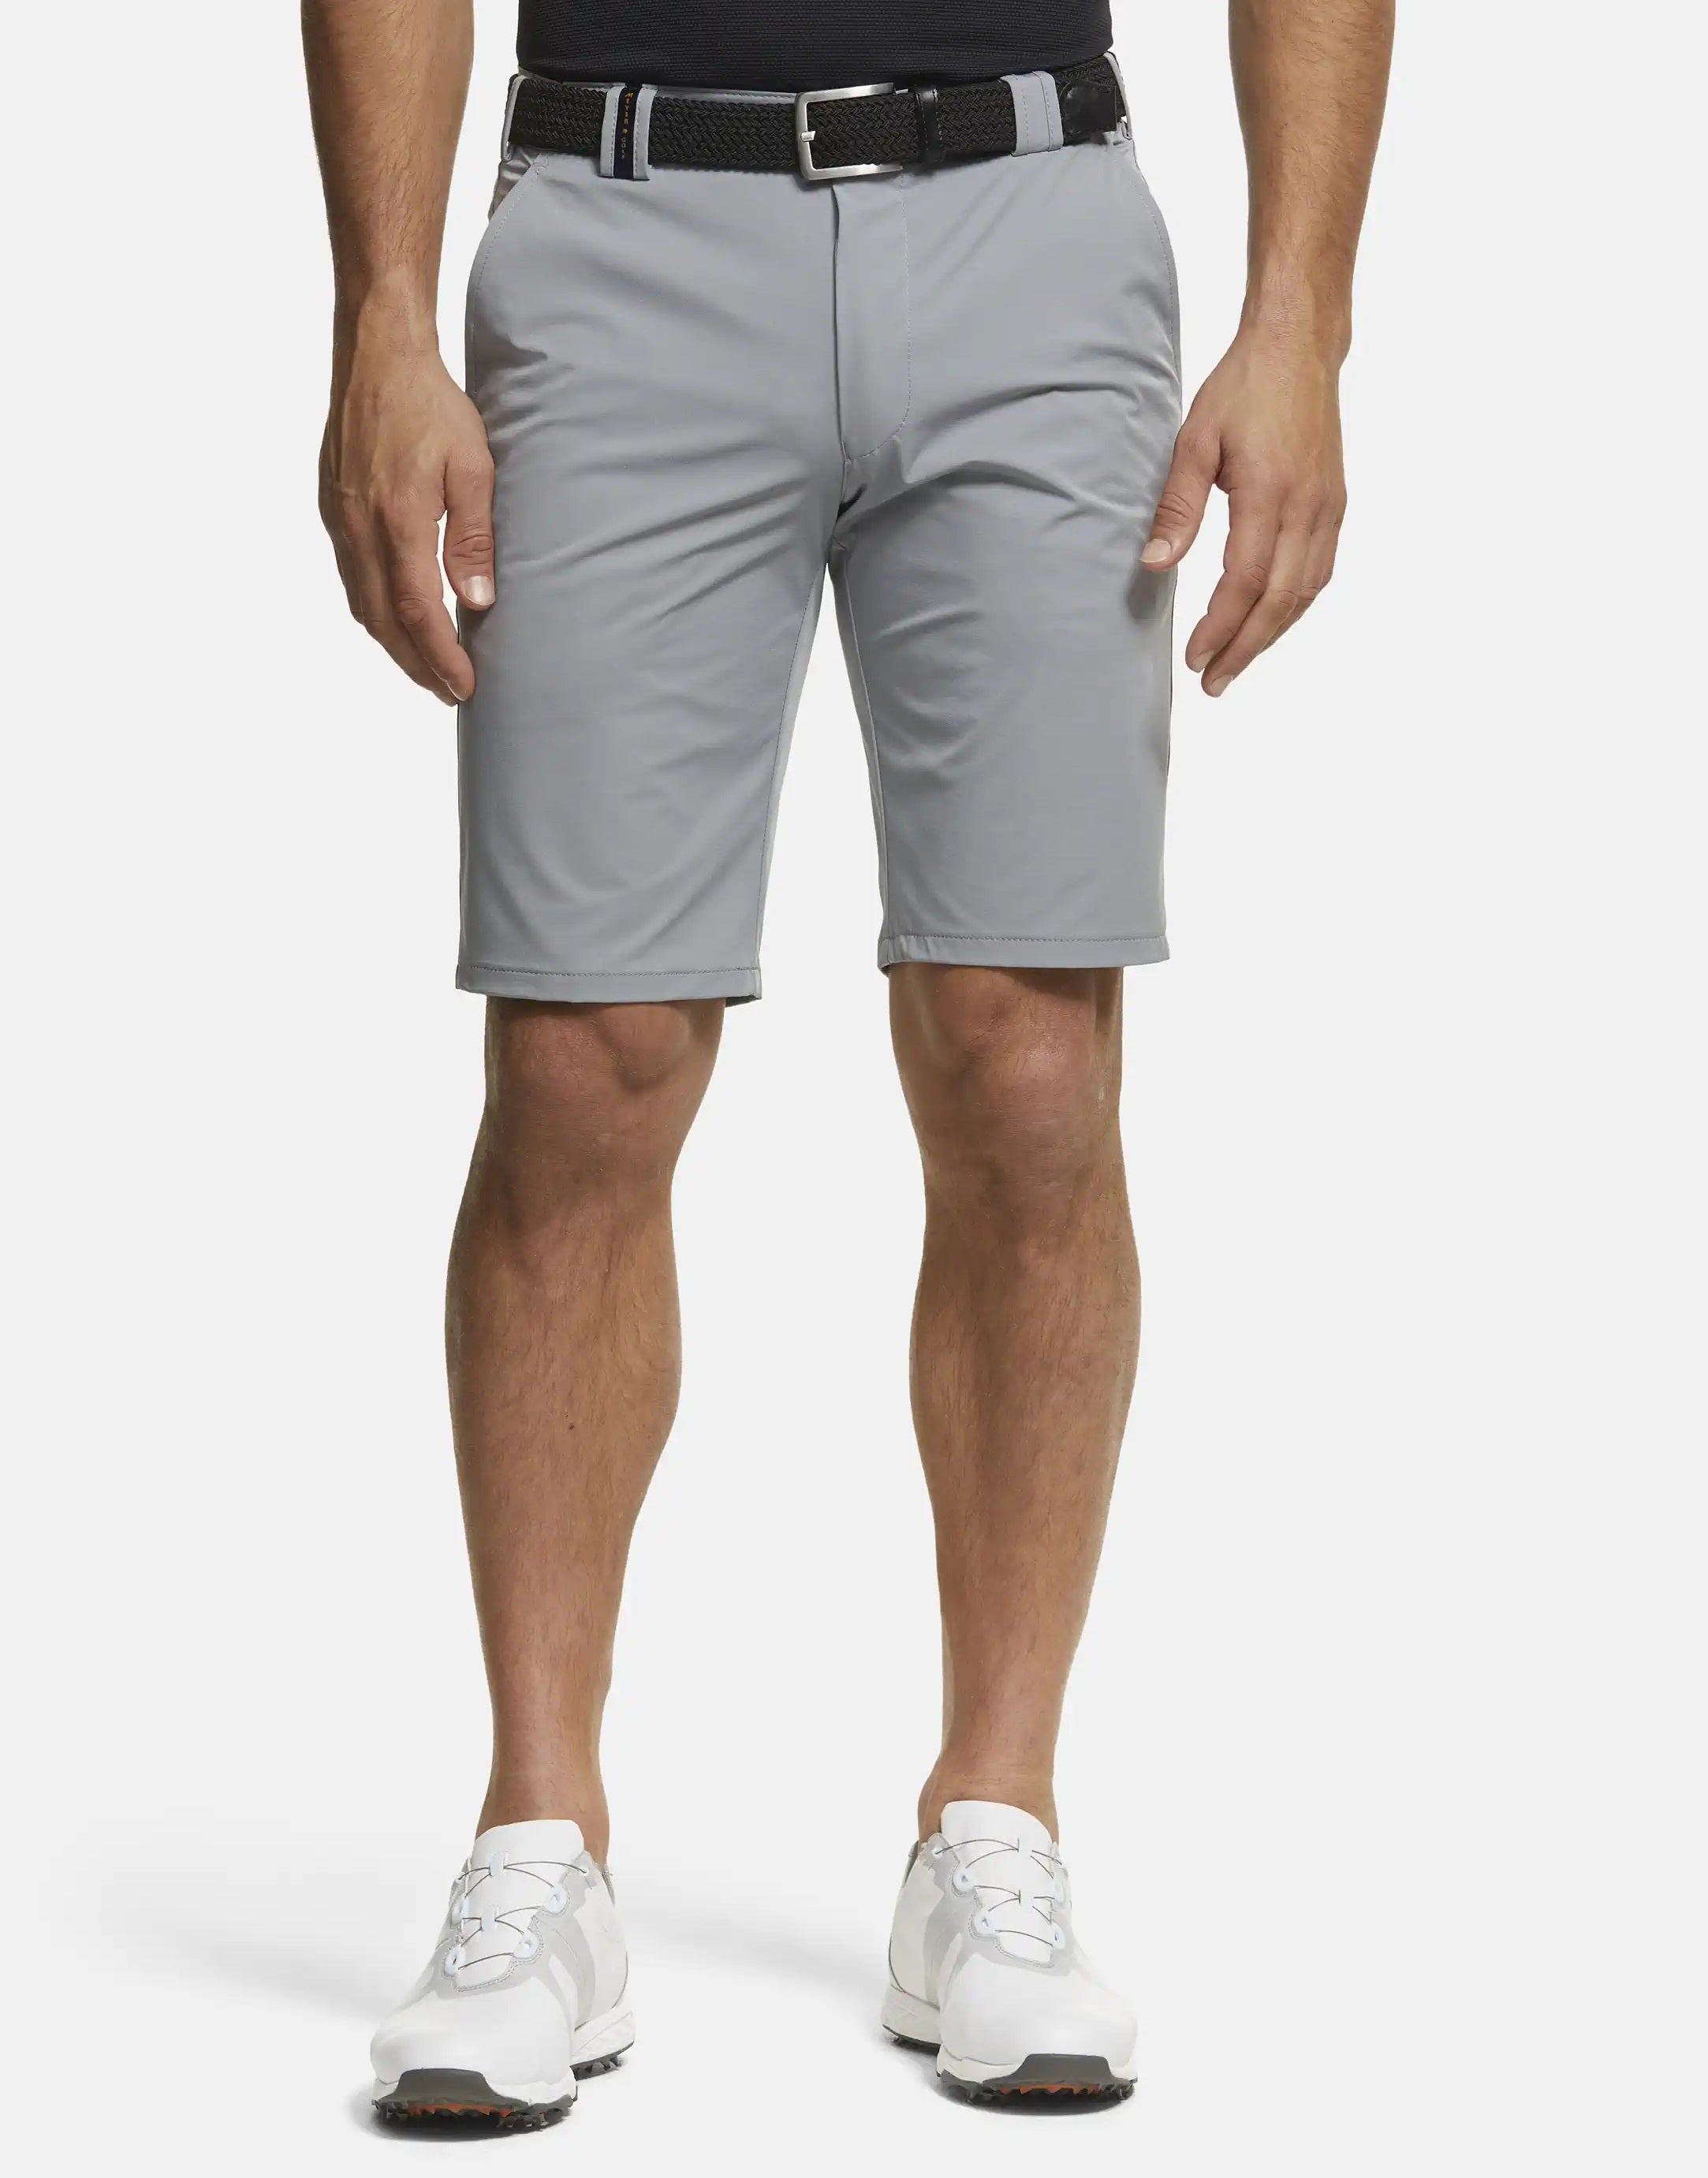 MEYER Golf Shorts - St. Andrews 8070 High Performance Cotton - Grey